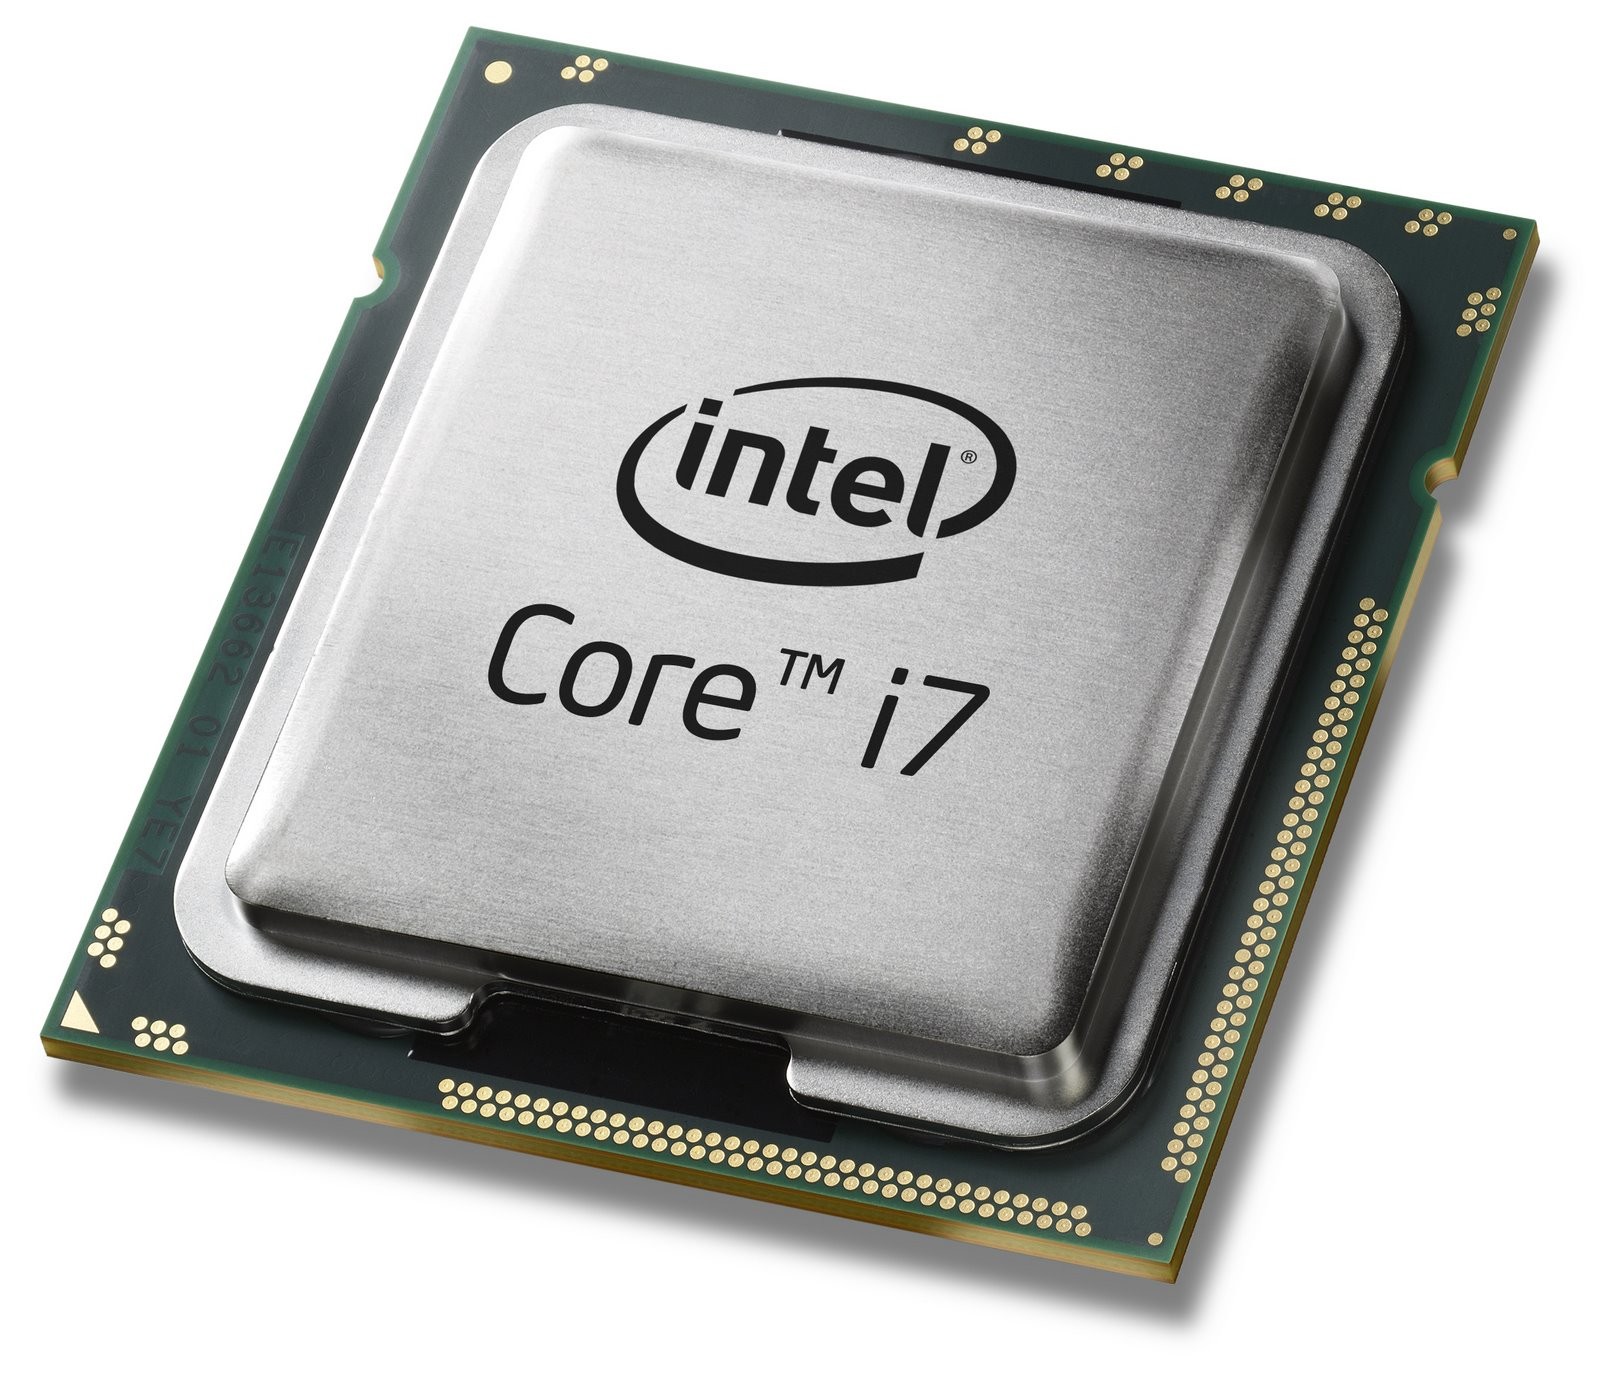 500030207-Intel Core i7-3930K SR0KY 3.2Ghz 5GT/s LGA 2011 Processor-image